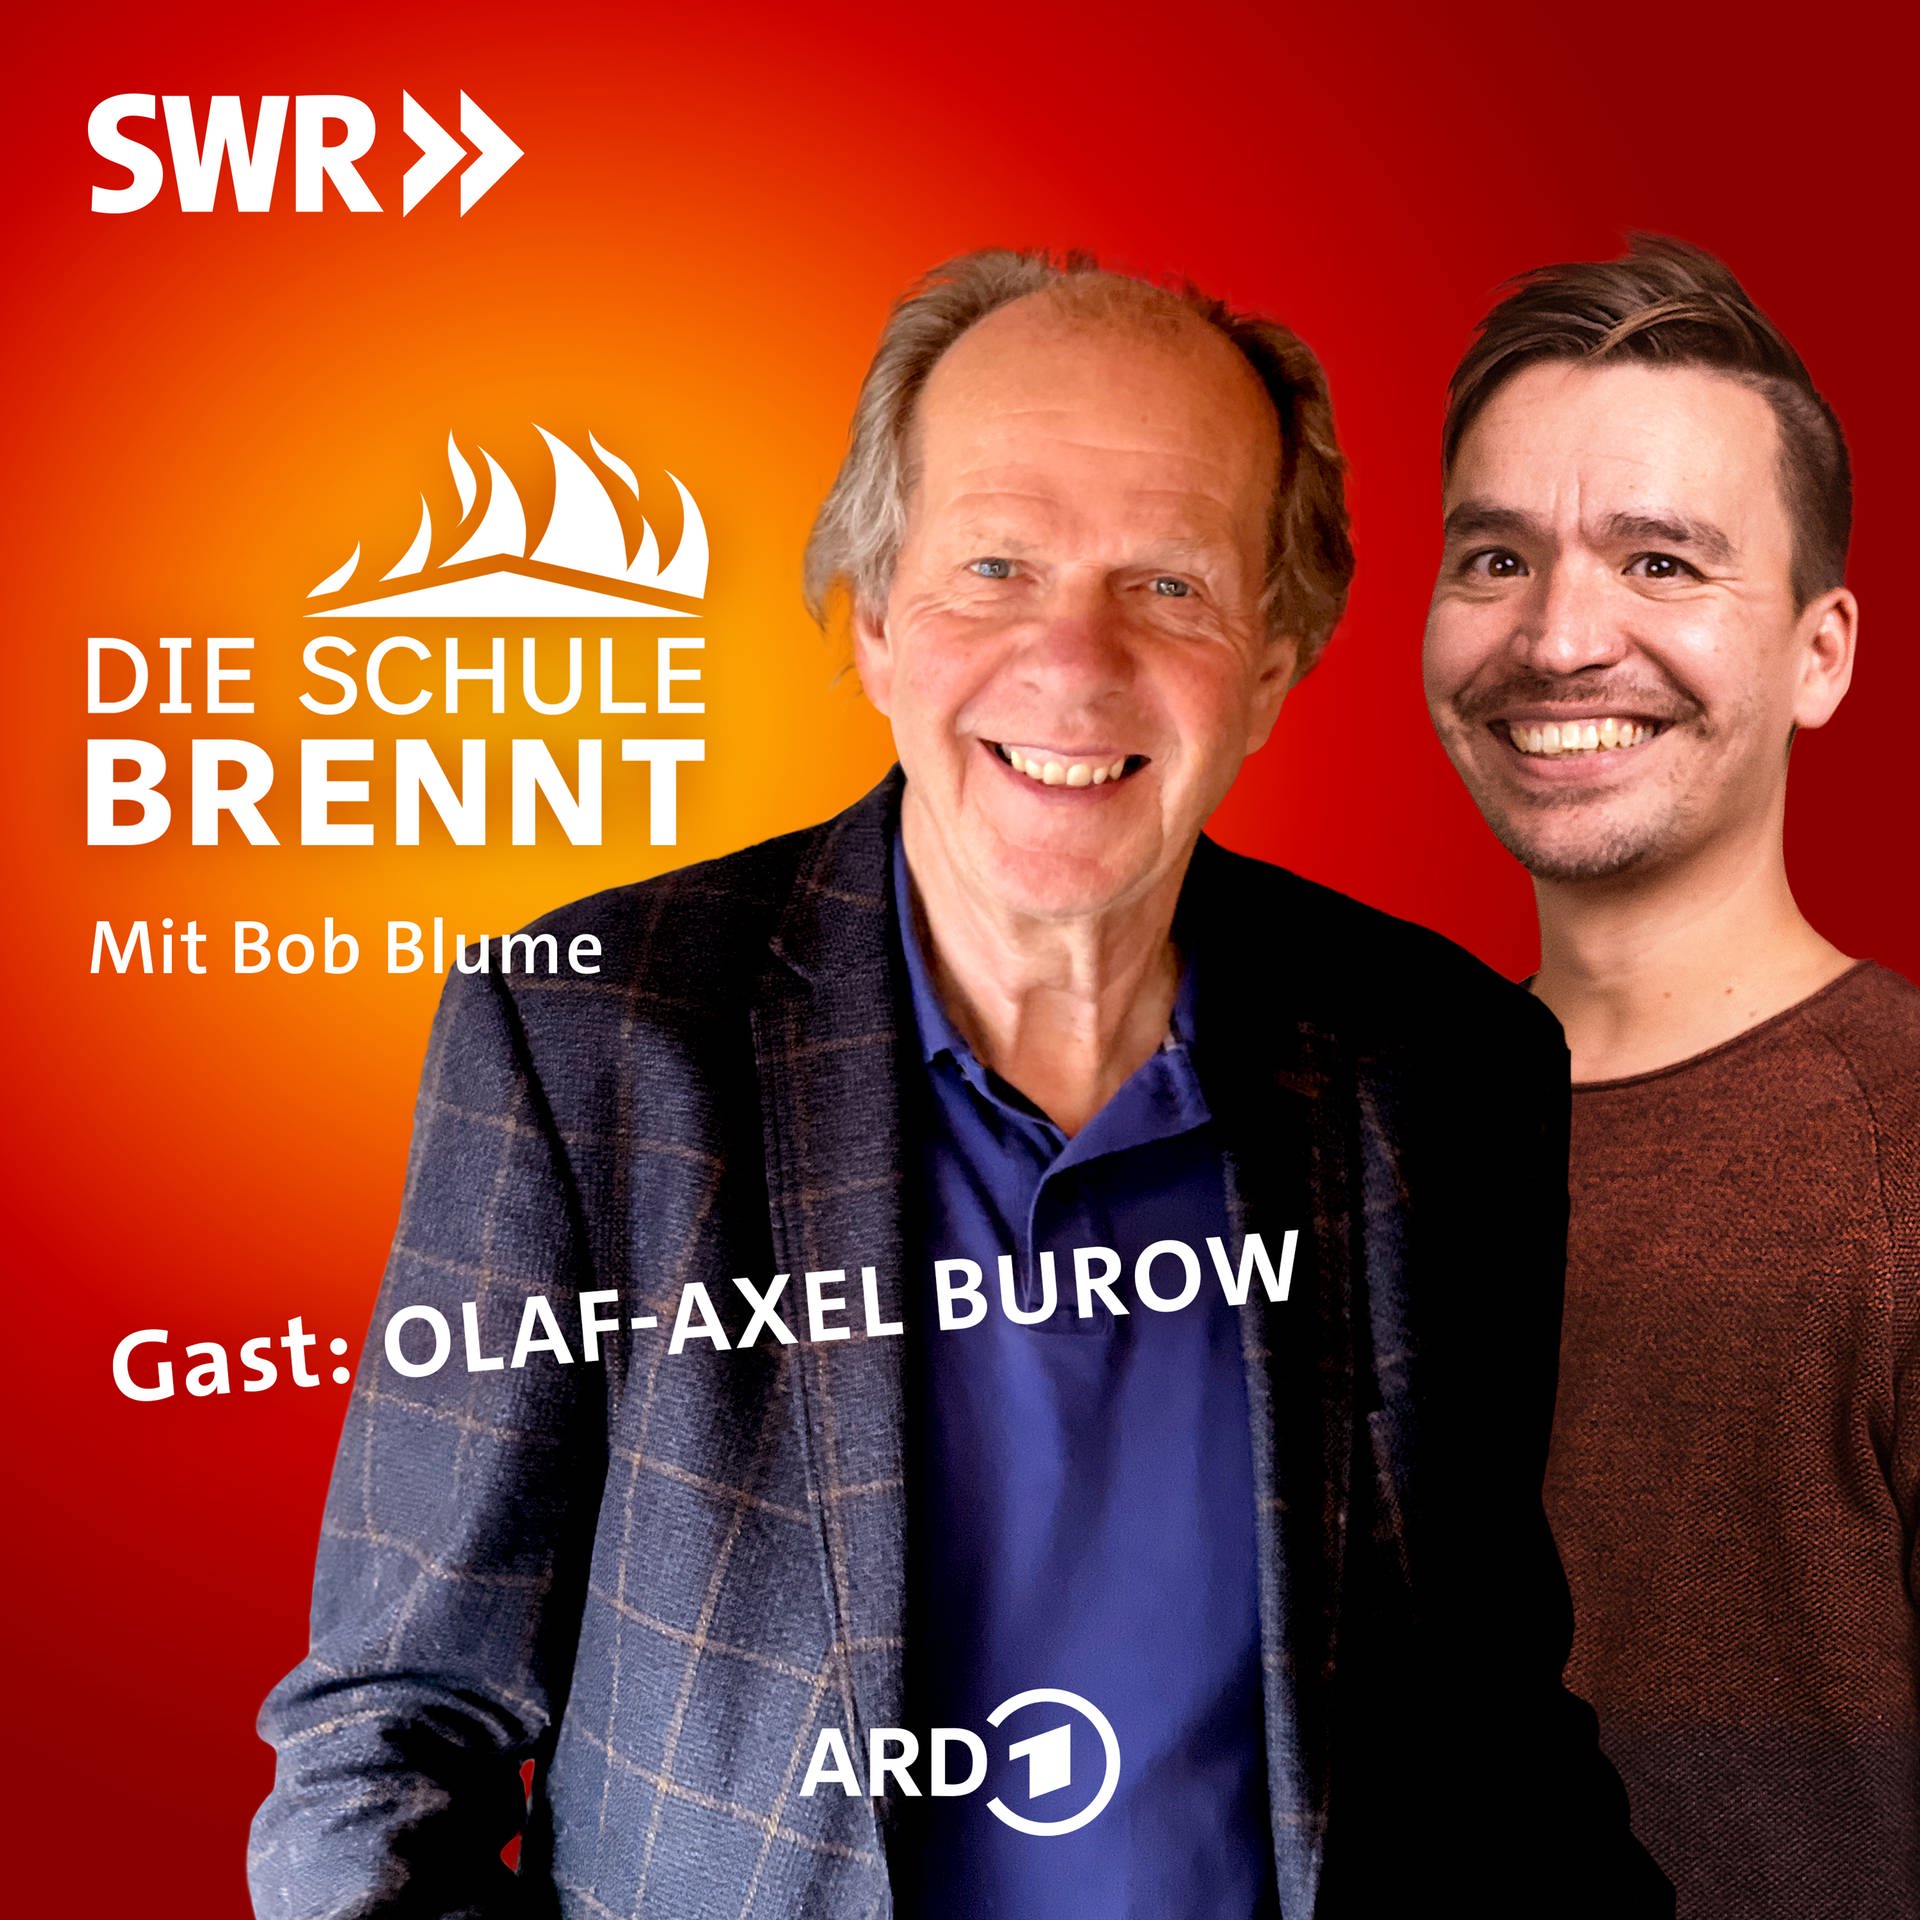 Olaf-Axel Burow: Mit KI zu positiver Pädagogik